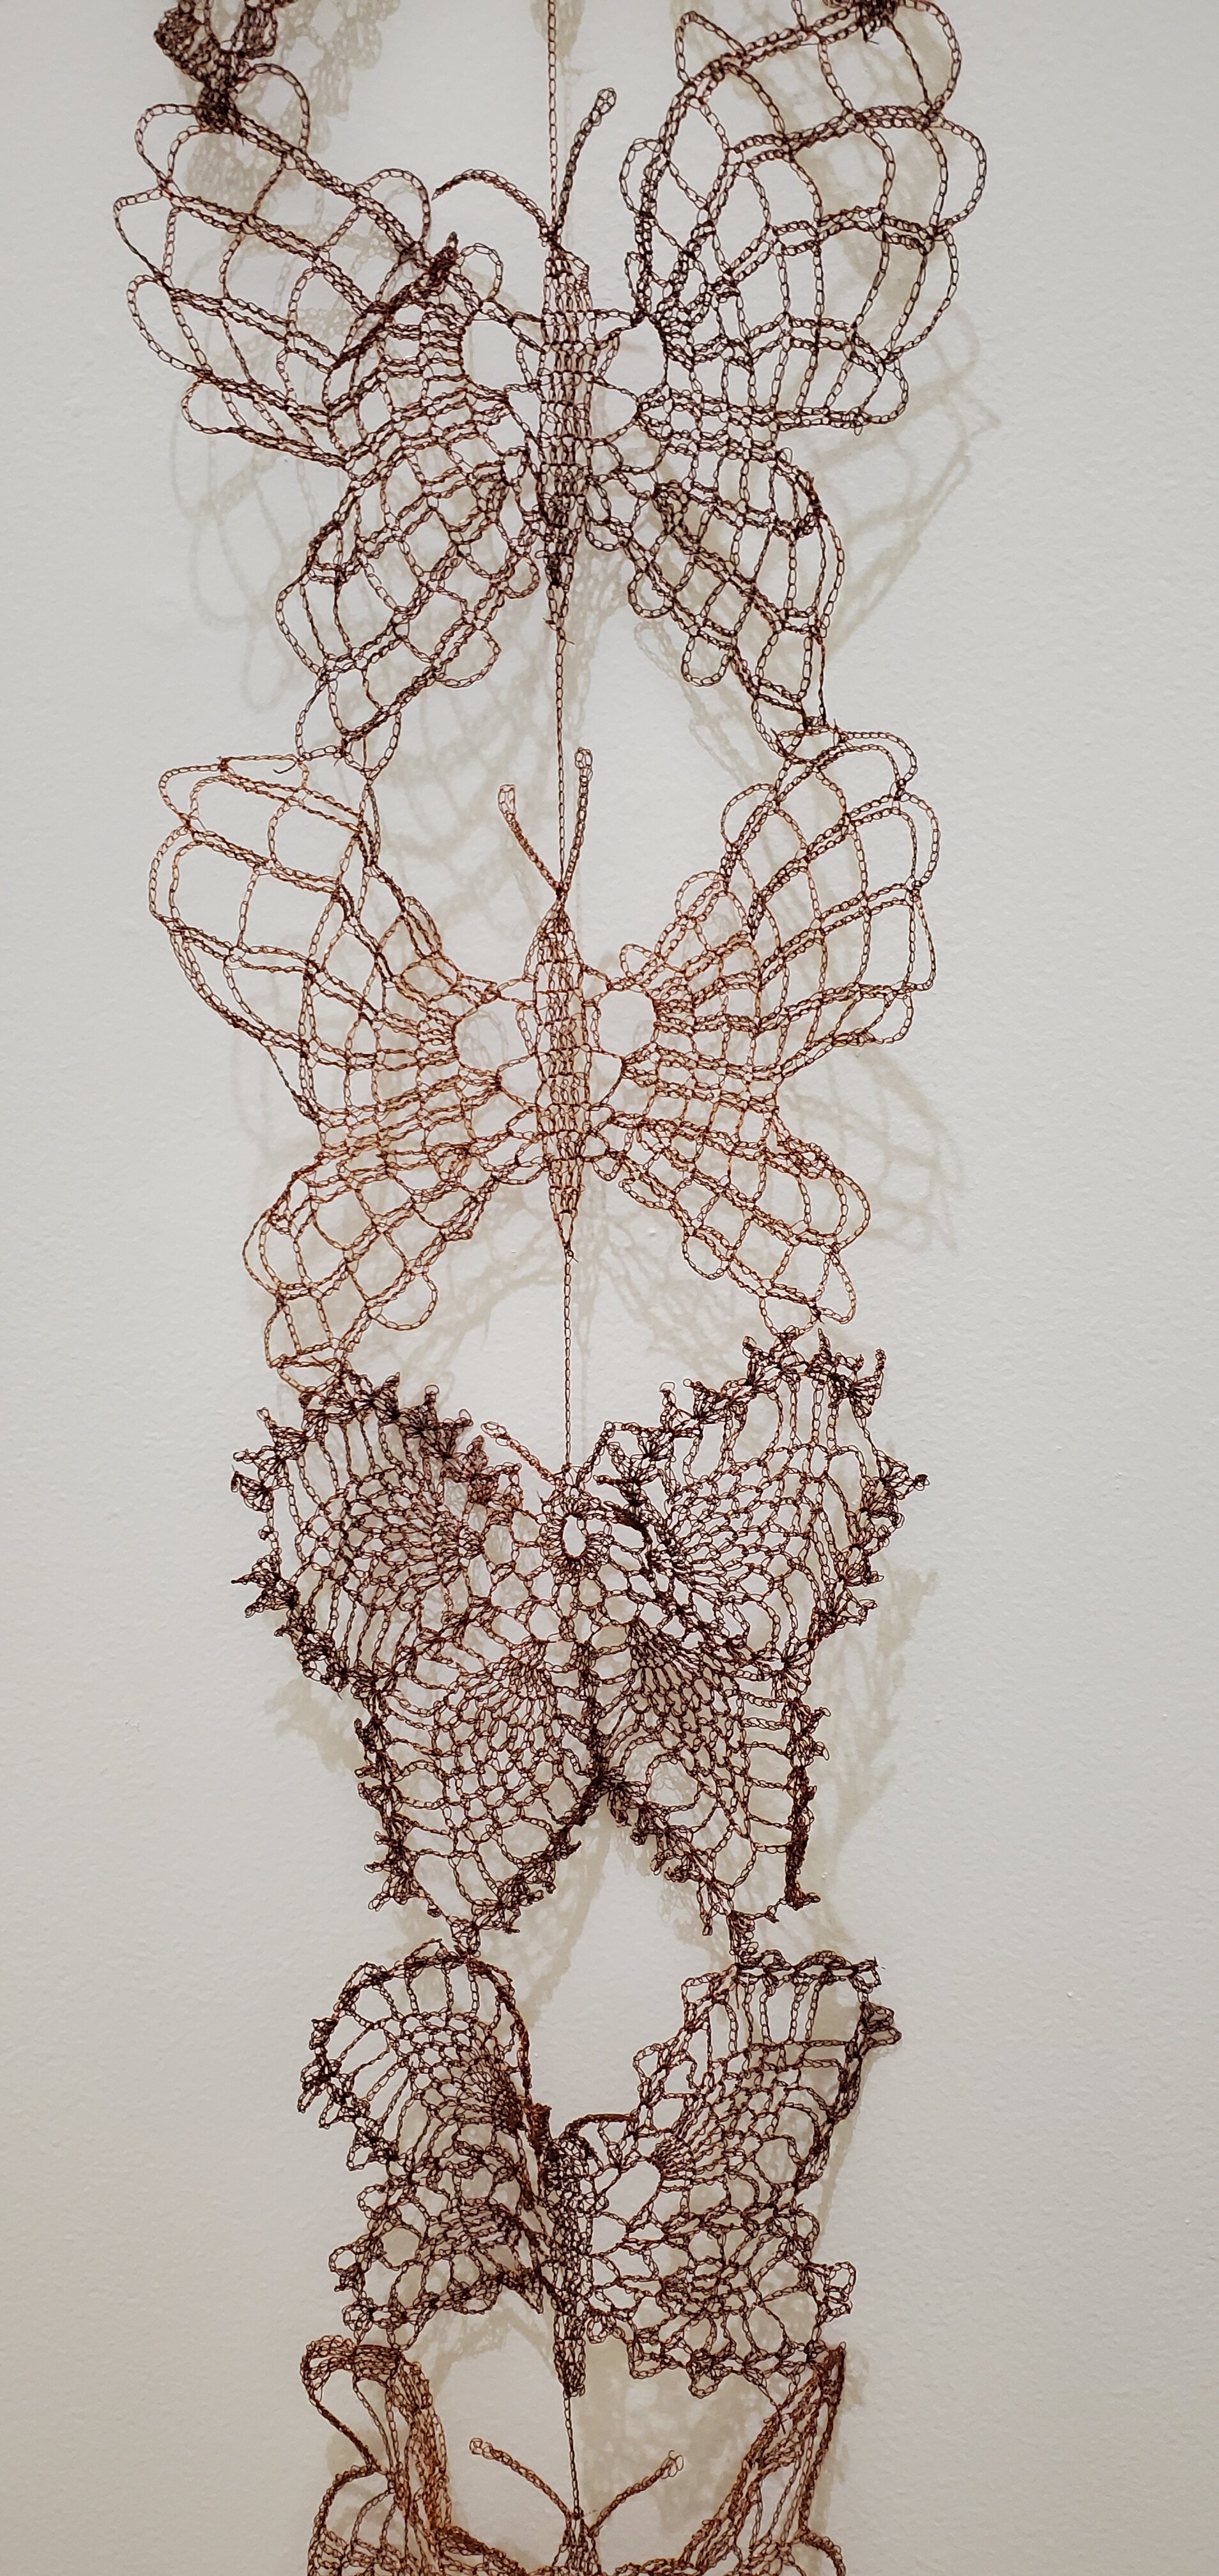 ektor garcia, Mariposas (detail), 2021. Crochet copper wire 9’ 1⁄2 x 14 (at top) x 1.5 in.